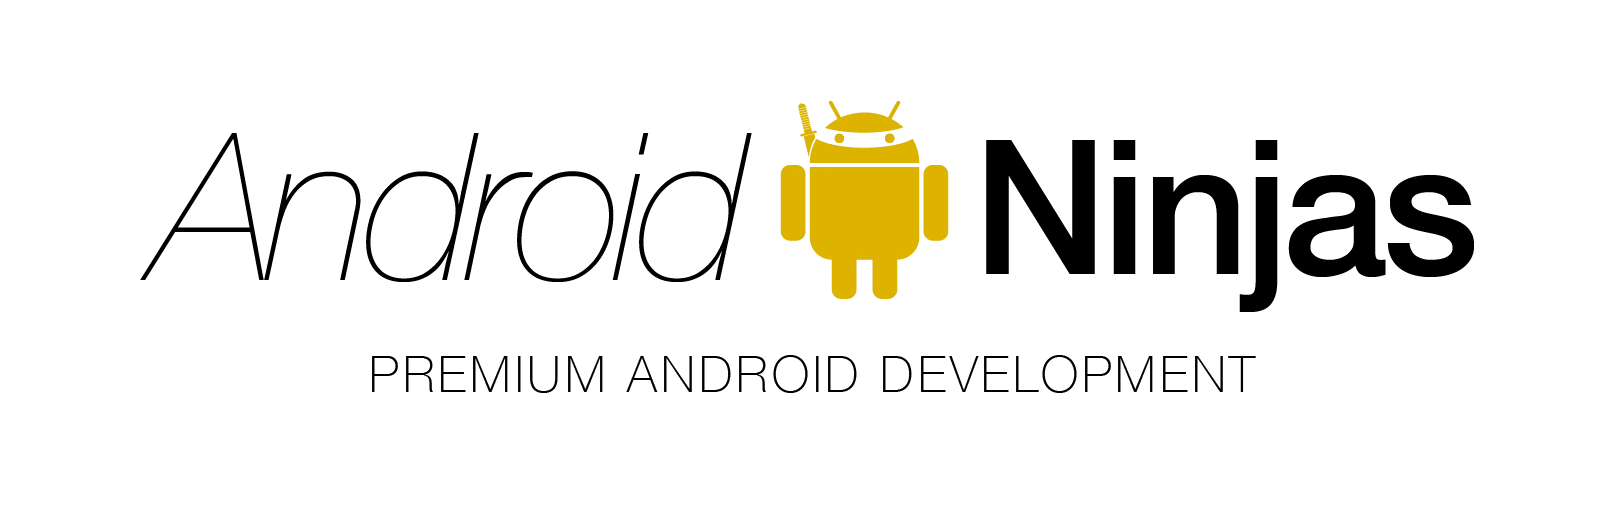 Android Ninjas logo en slogan